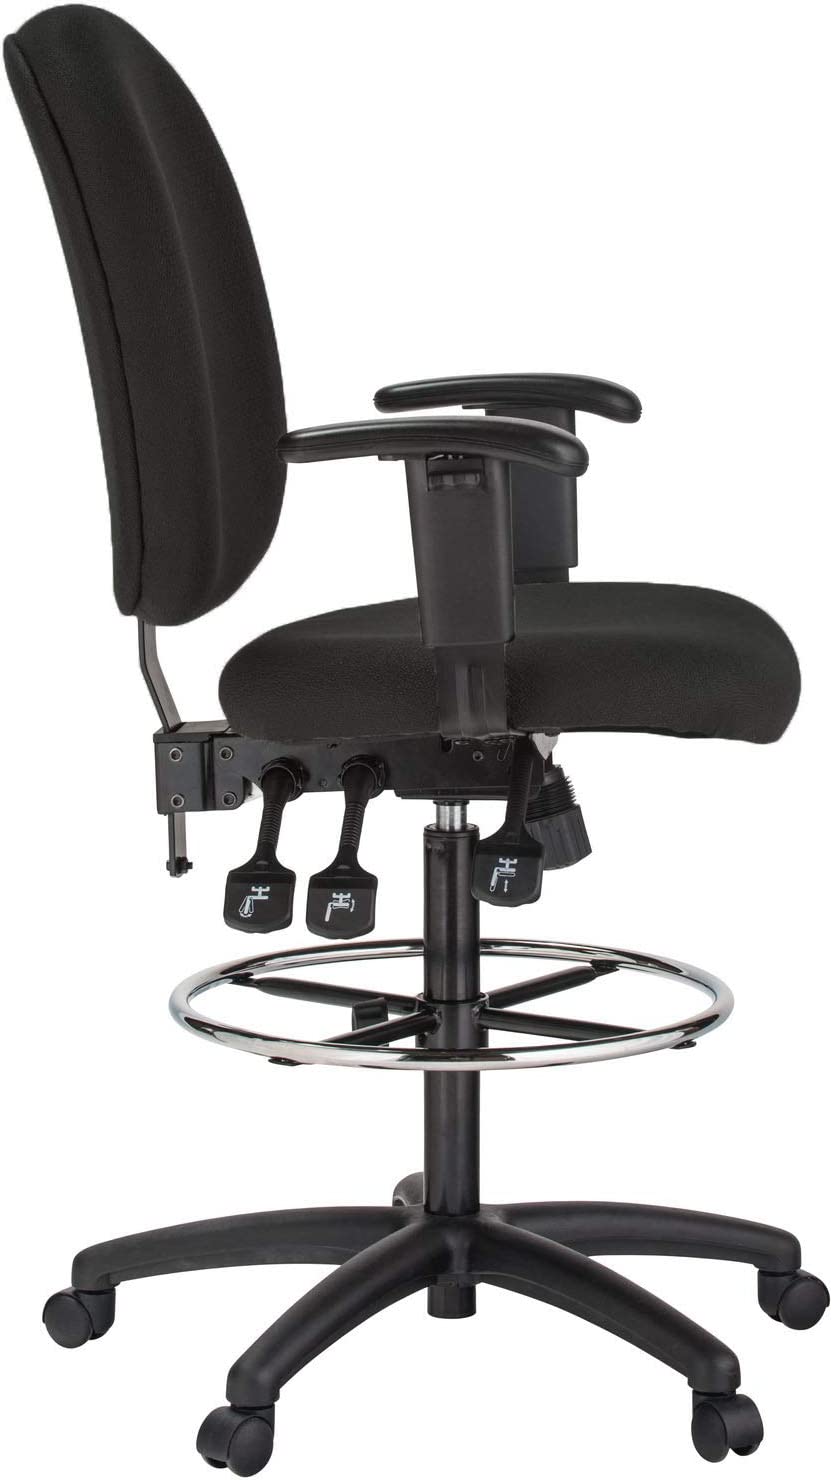 Harwick Extra Tall Ergonomic Drafting Chair - Black Leather